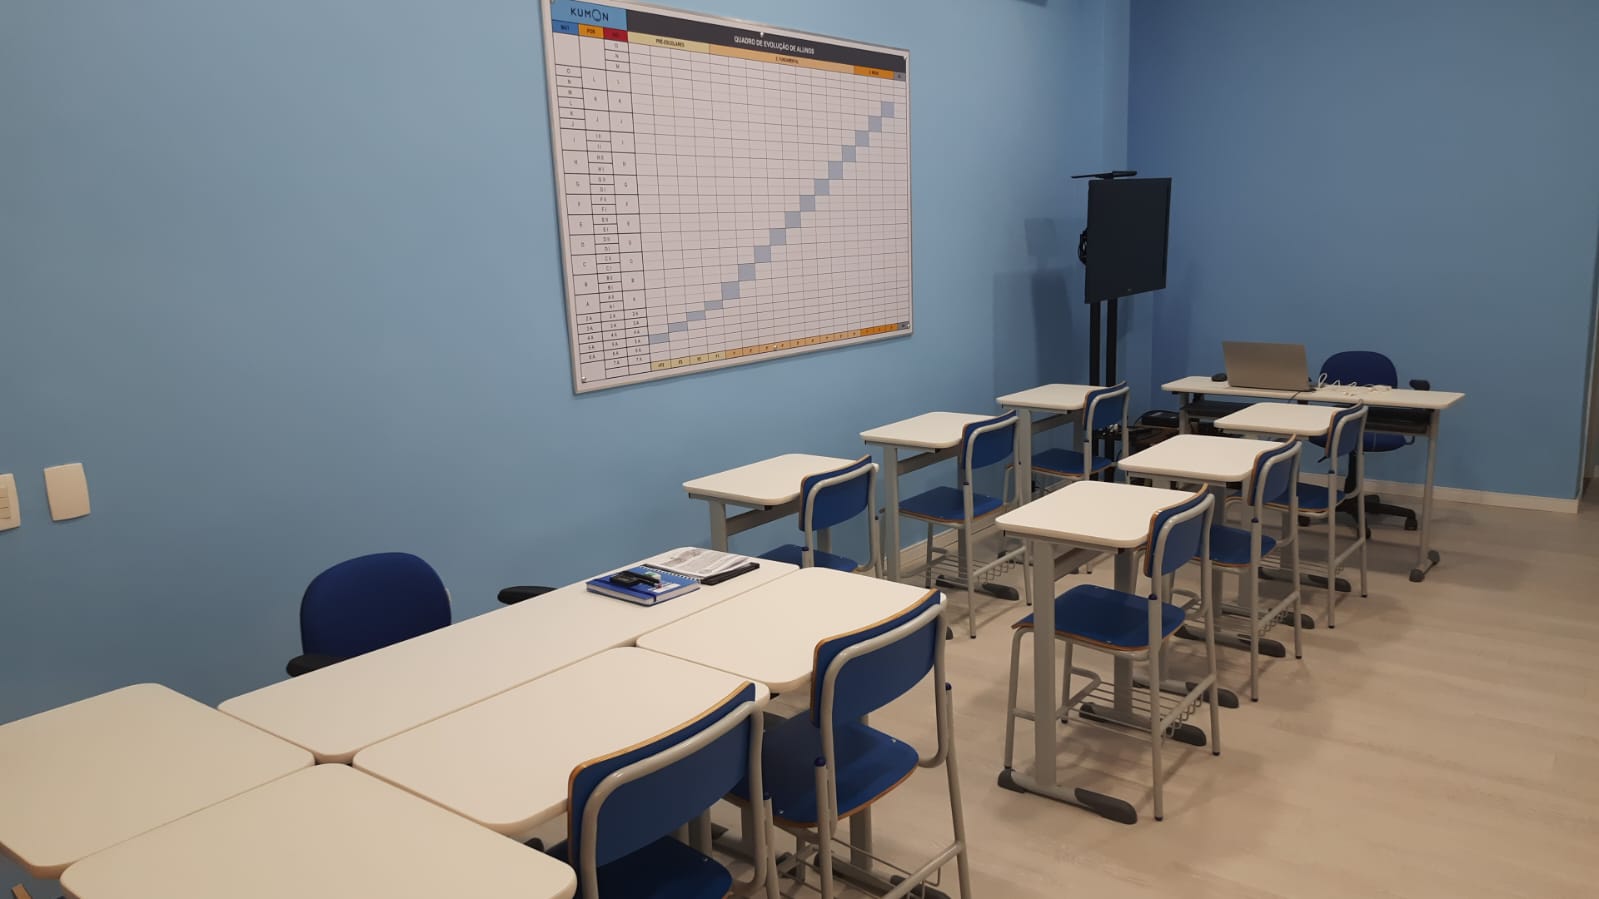 Sala de aula do Kumon Ipanema/RJ